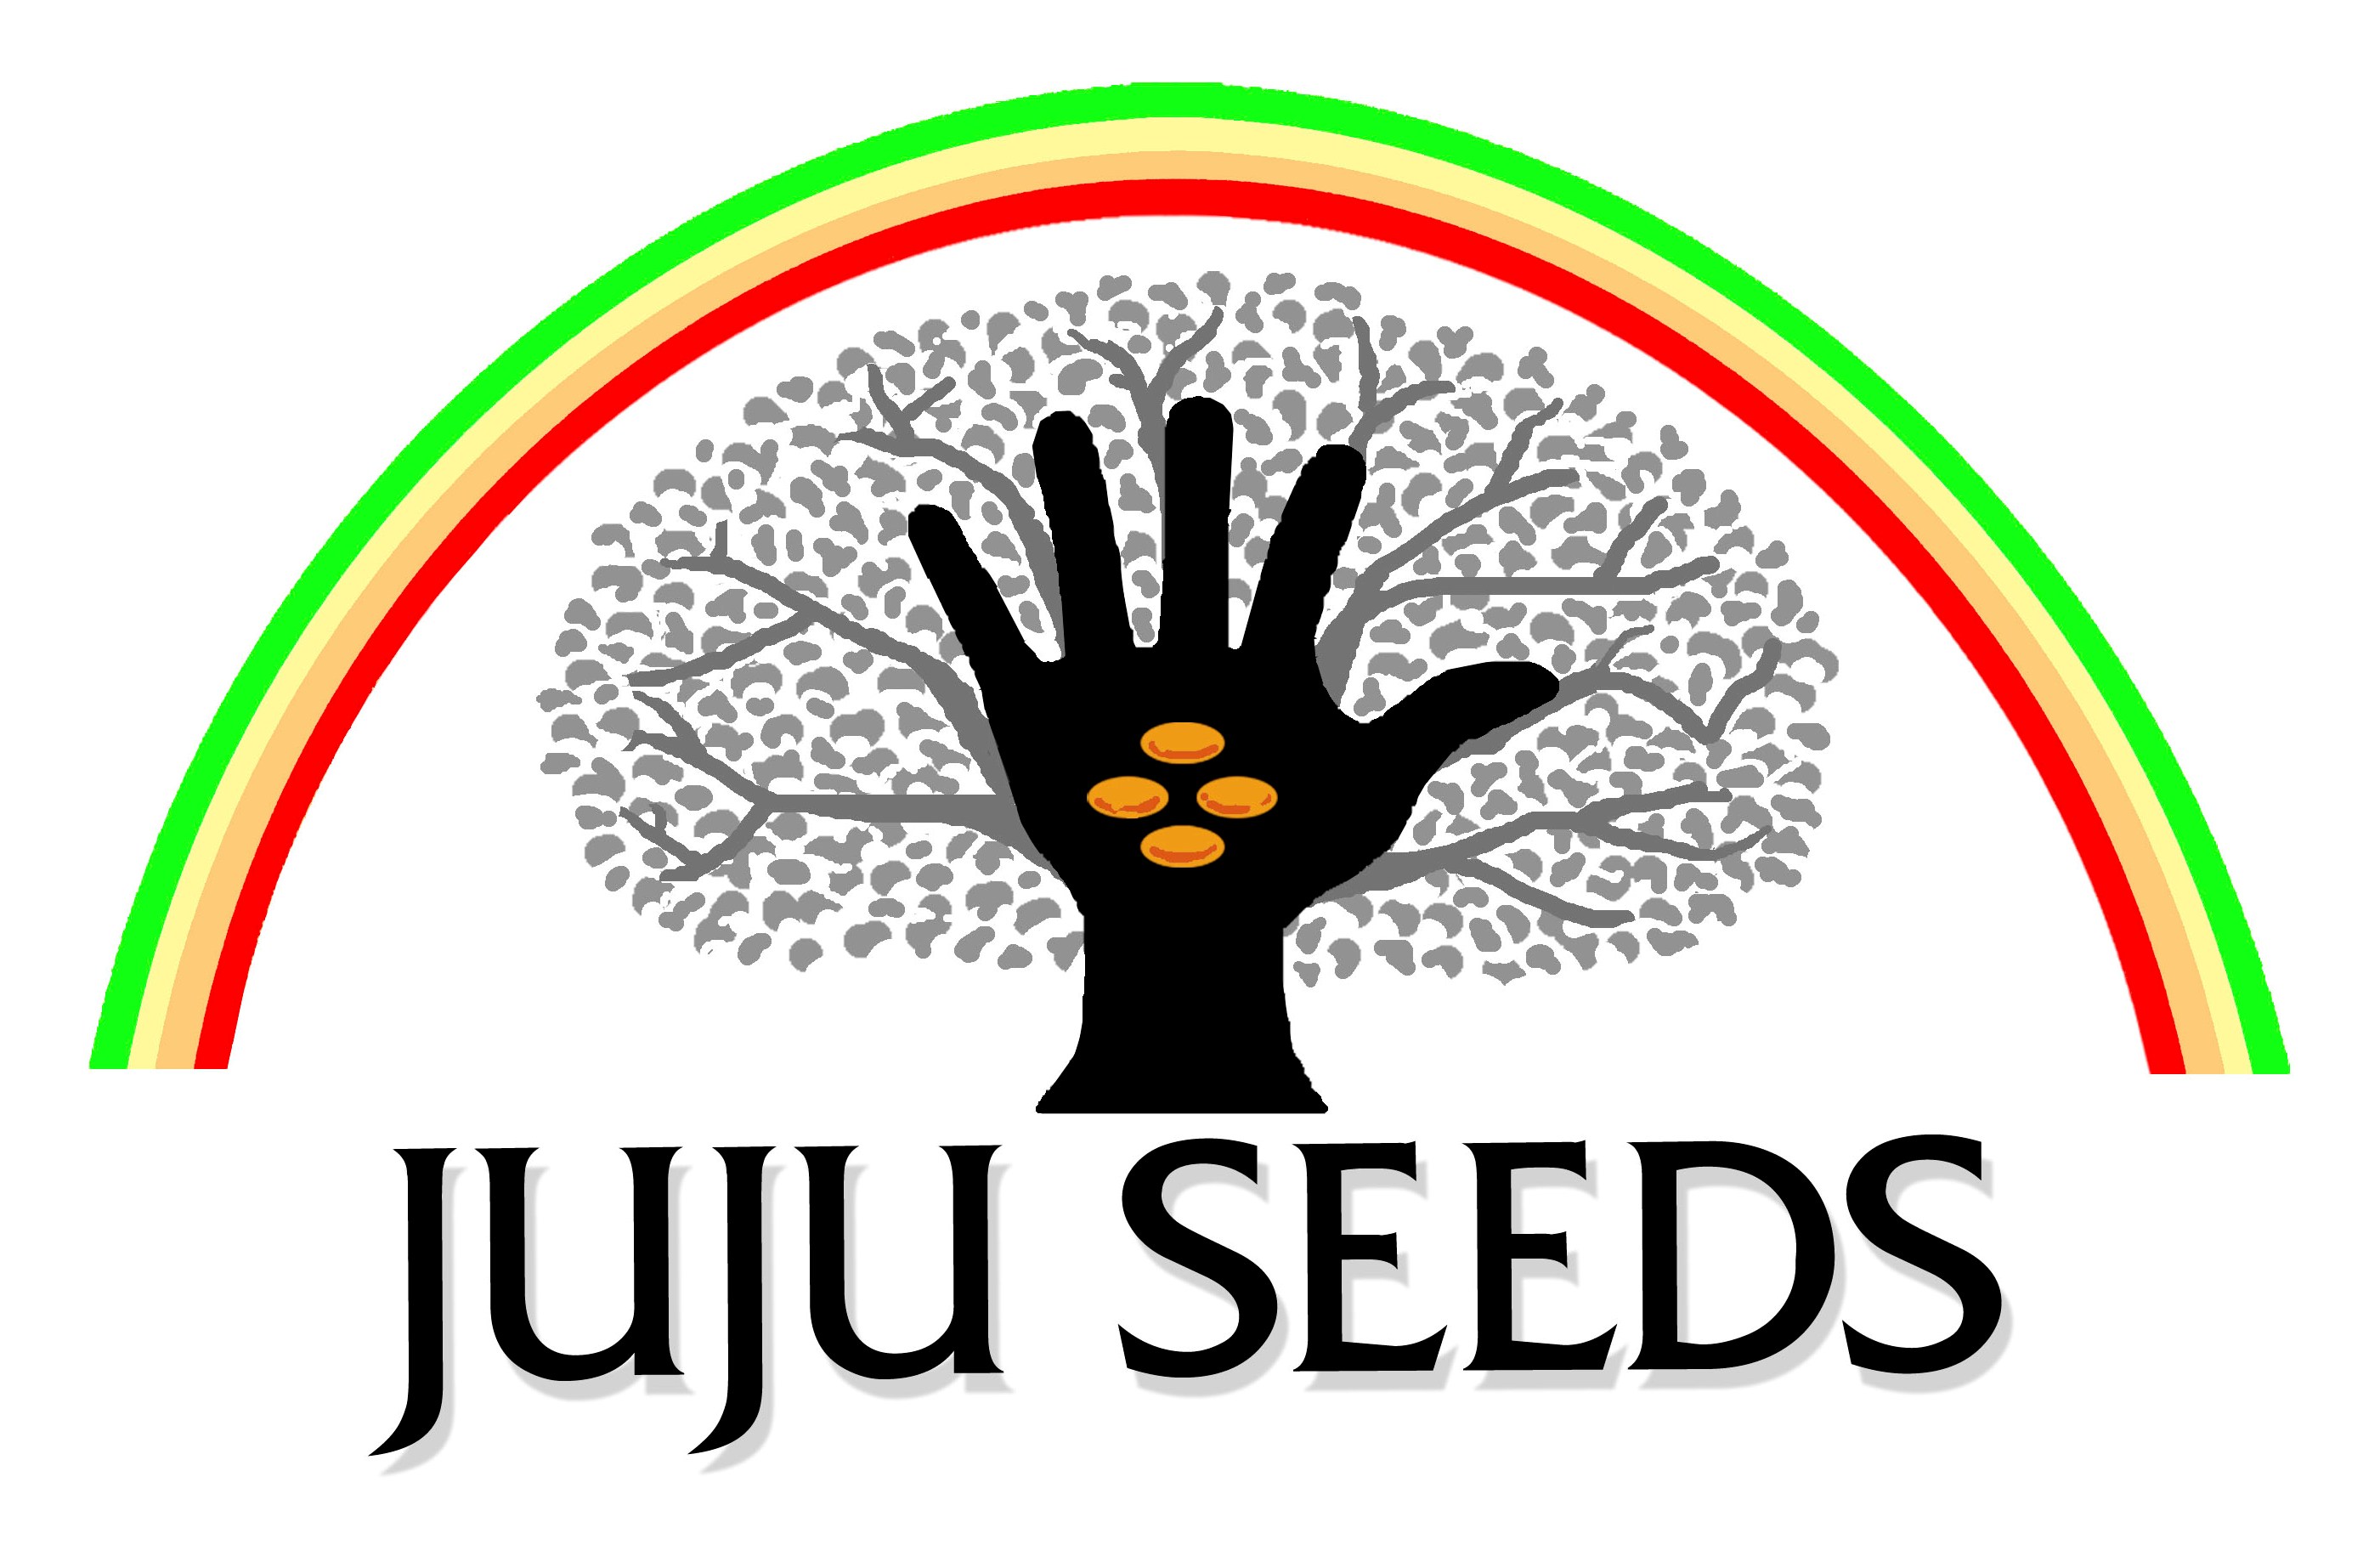 Juju Seeds | planting ideas of empowerment – creating possibilities